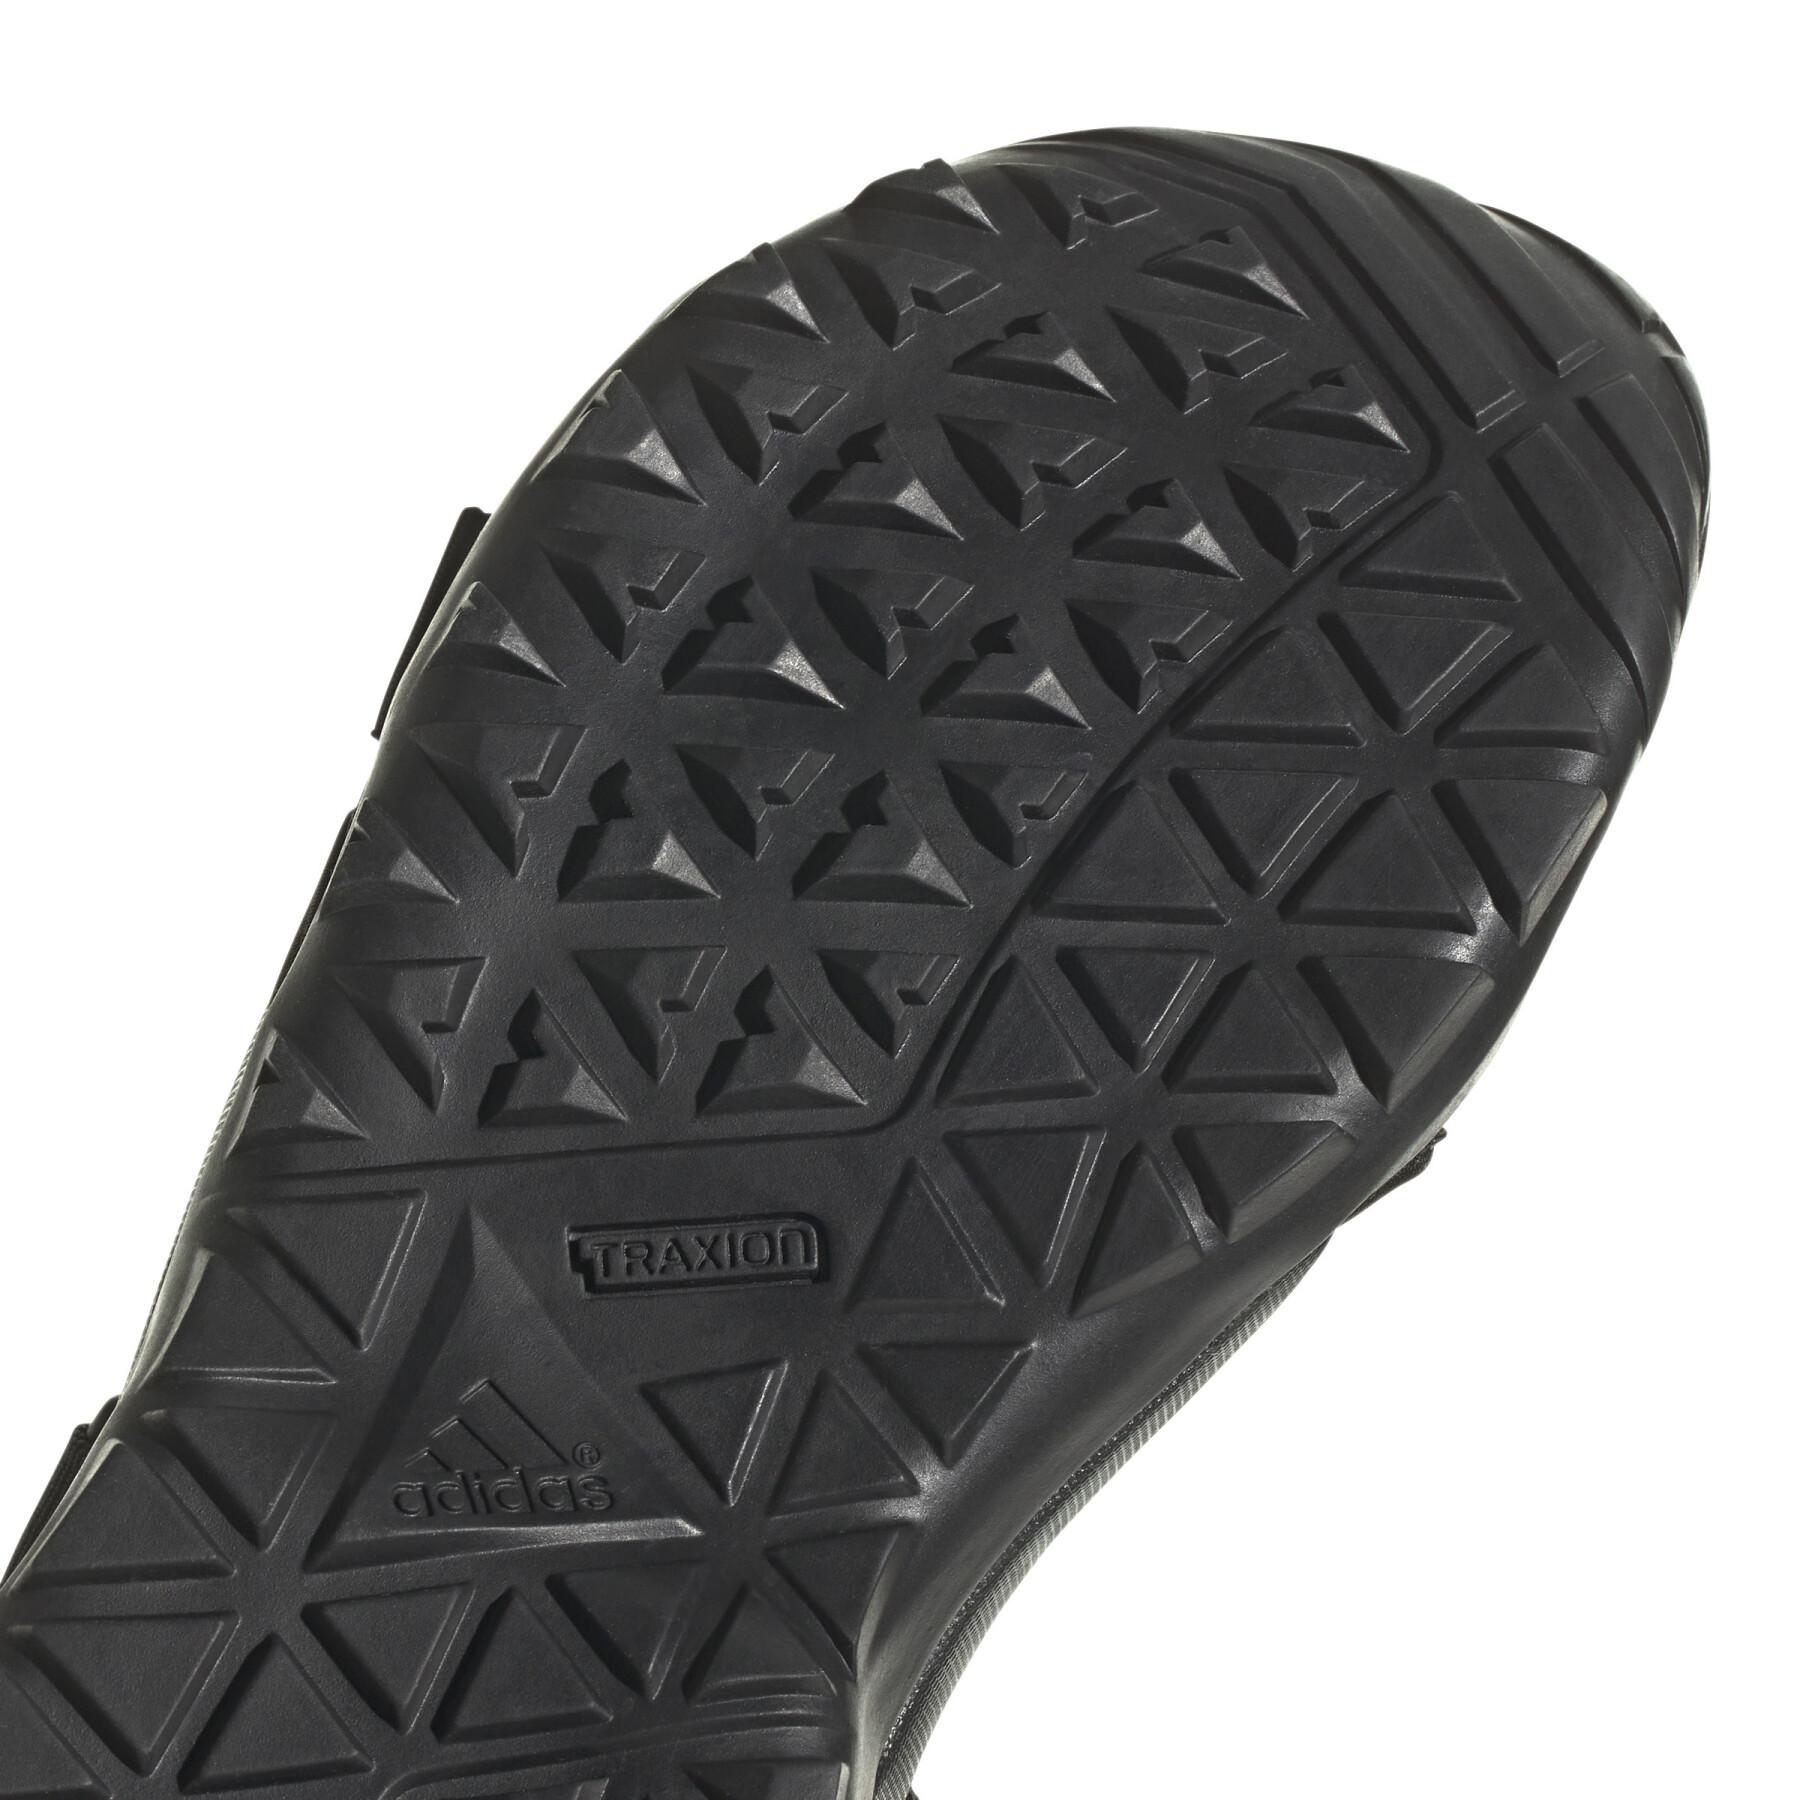 Sandales adidas Terrex Cyprex Ultra DLX